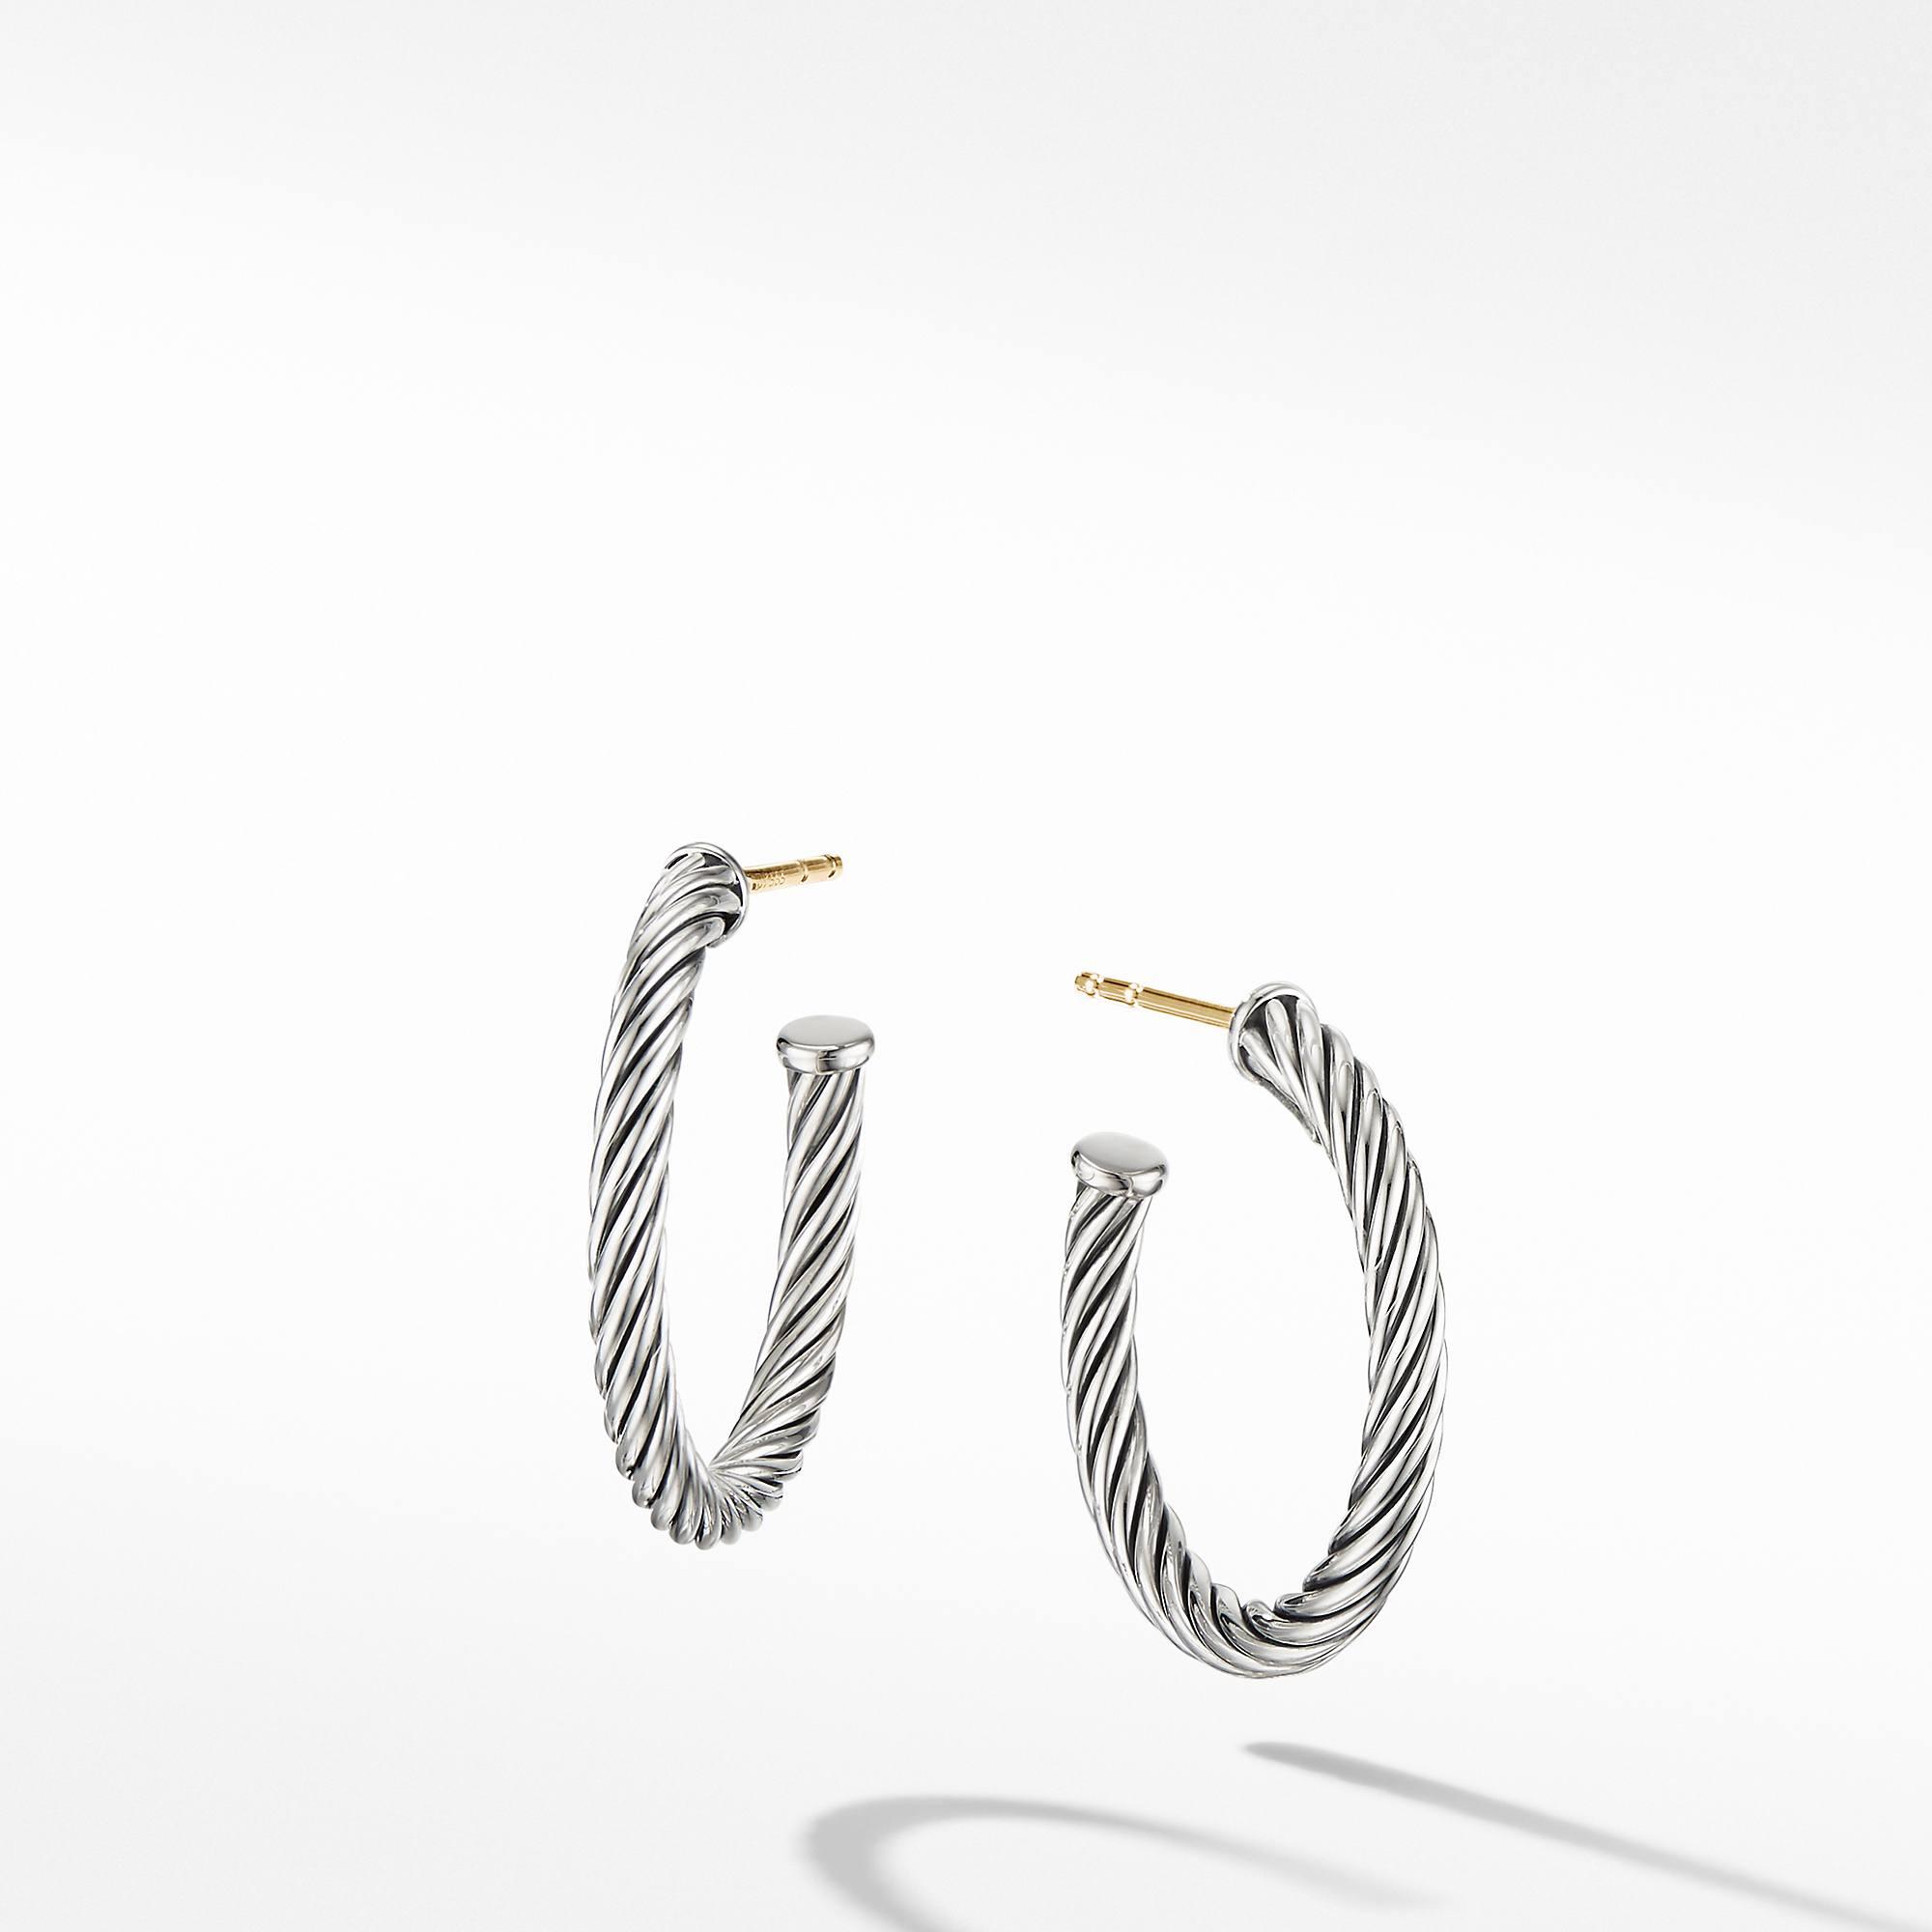 David Yurman Small Cable Hoop Earrings in Sterling Silver